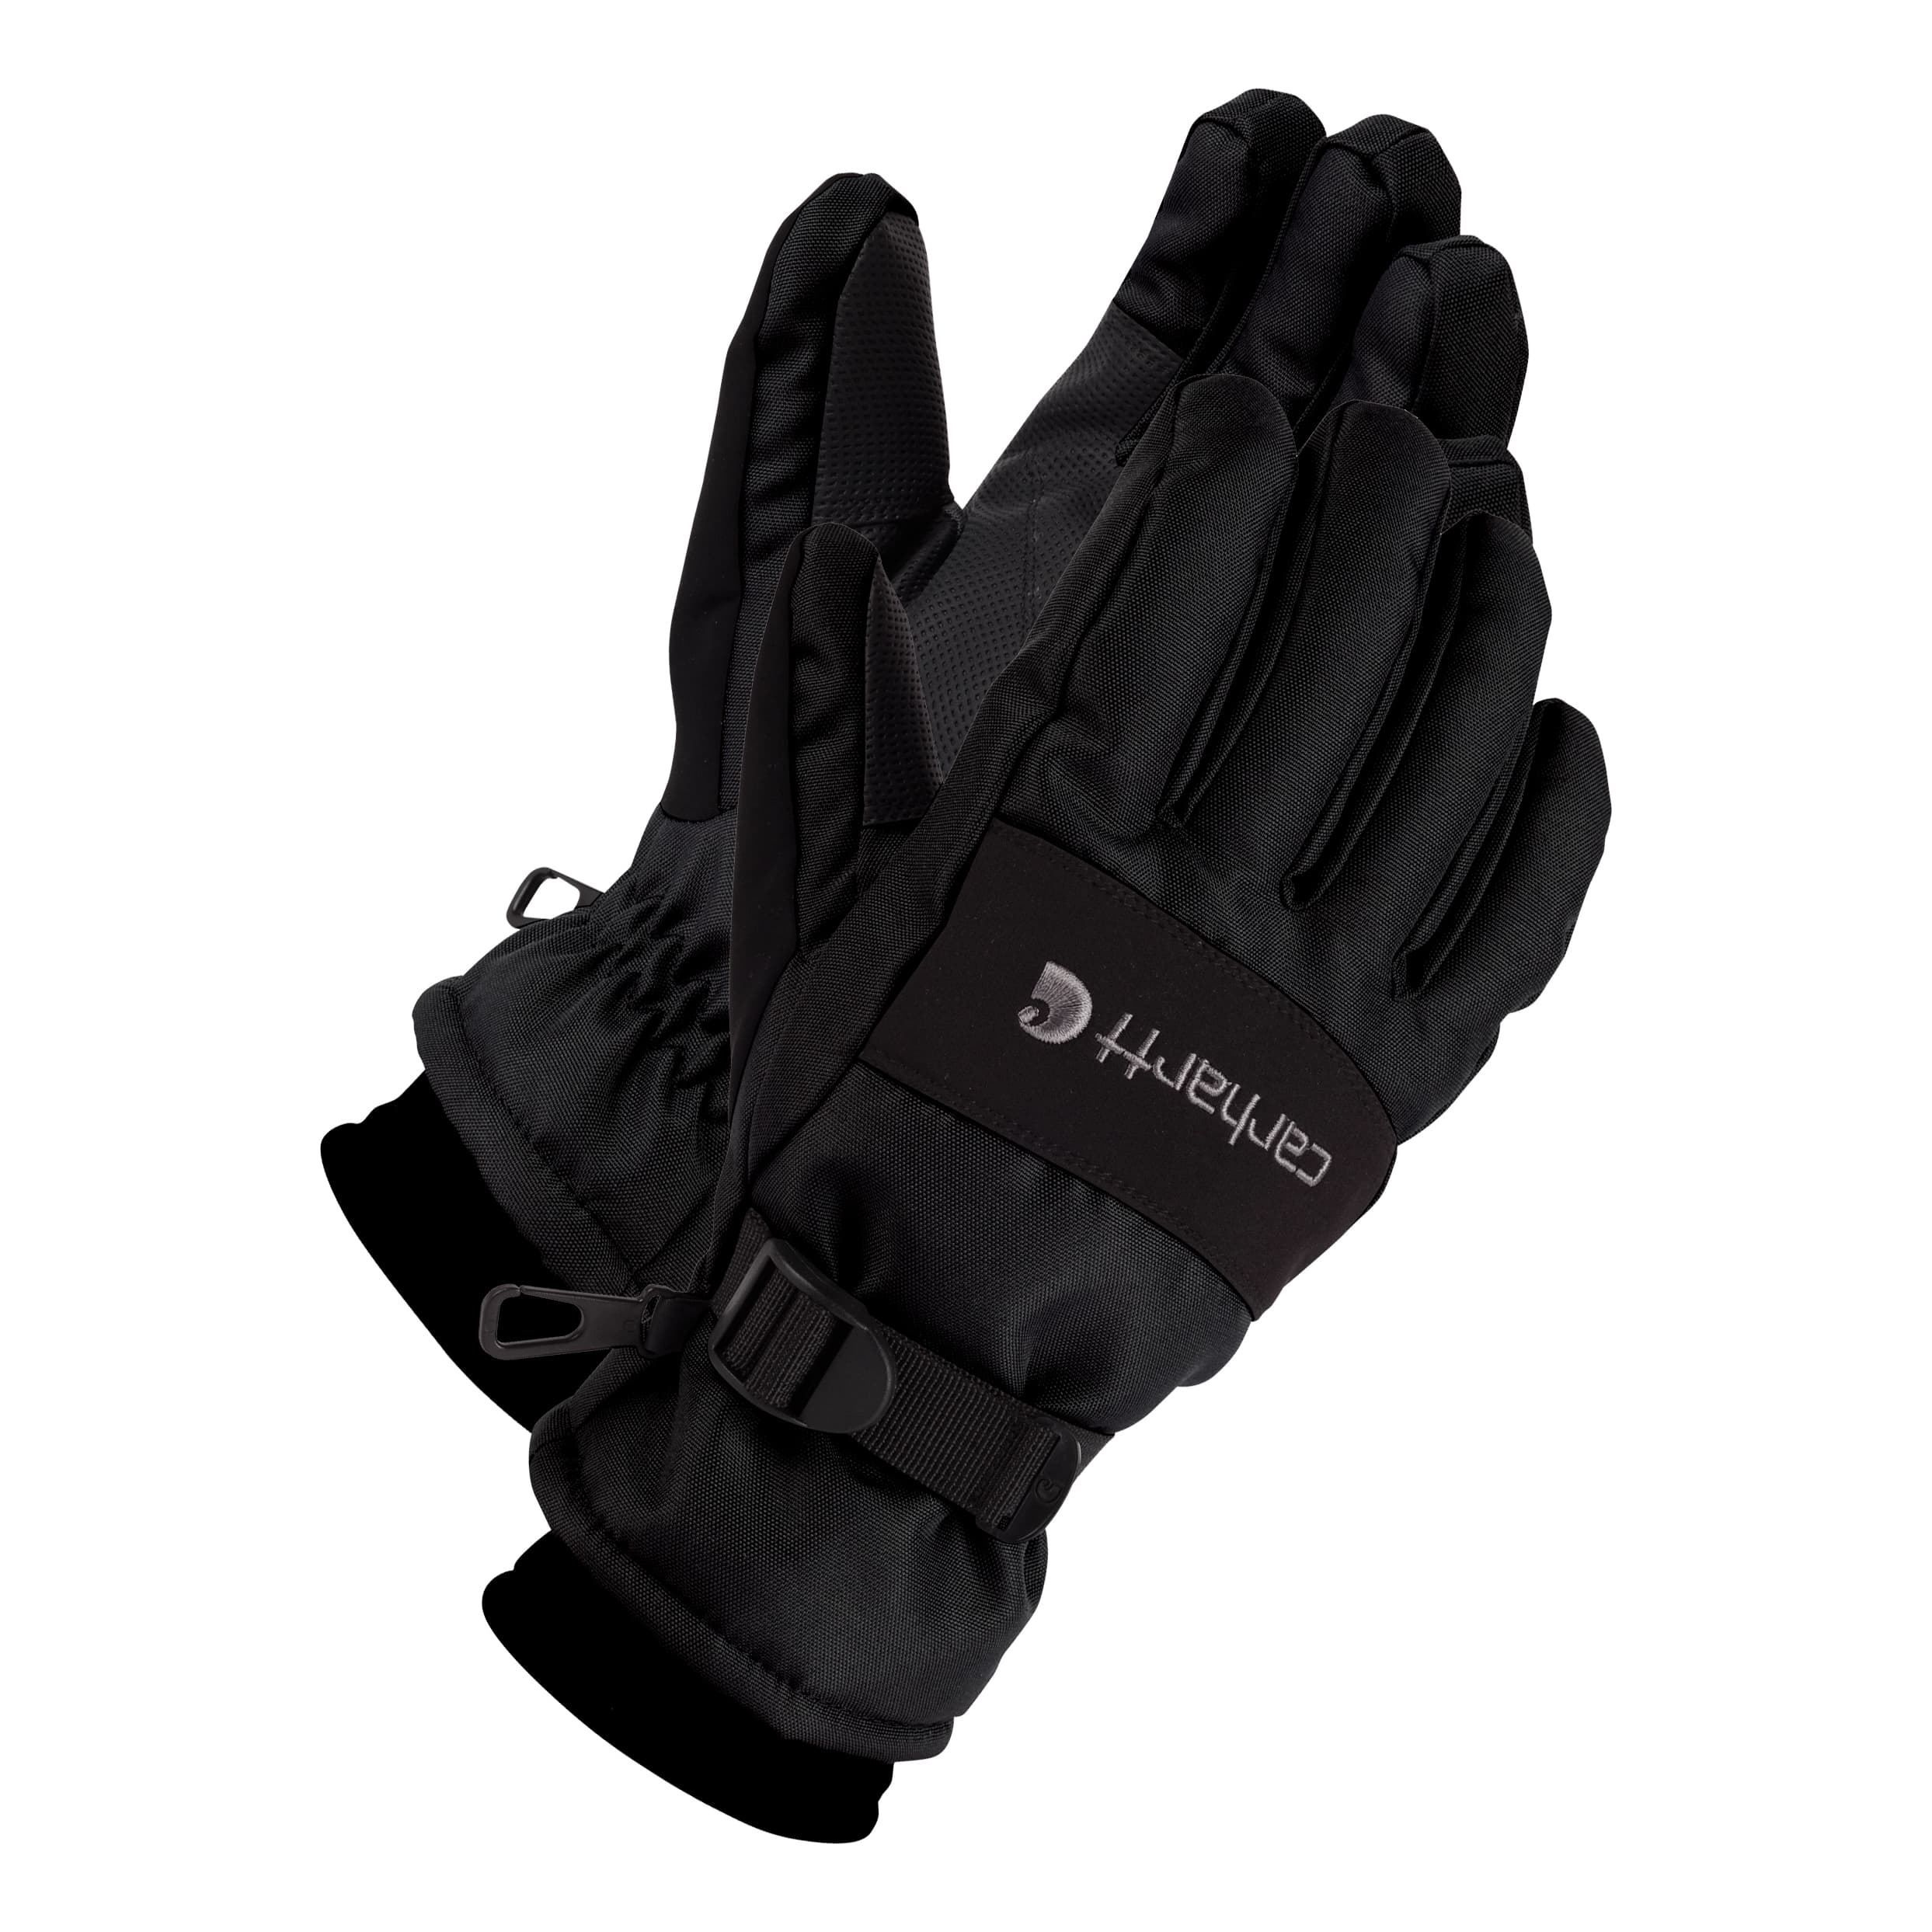 Carhartt® Men’s Waterproof Insulated Gloves - Black